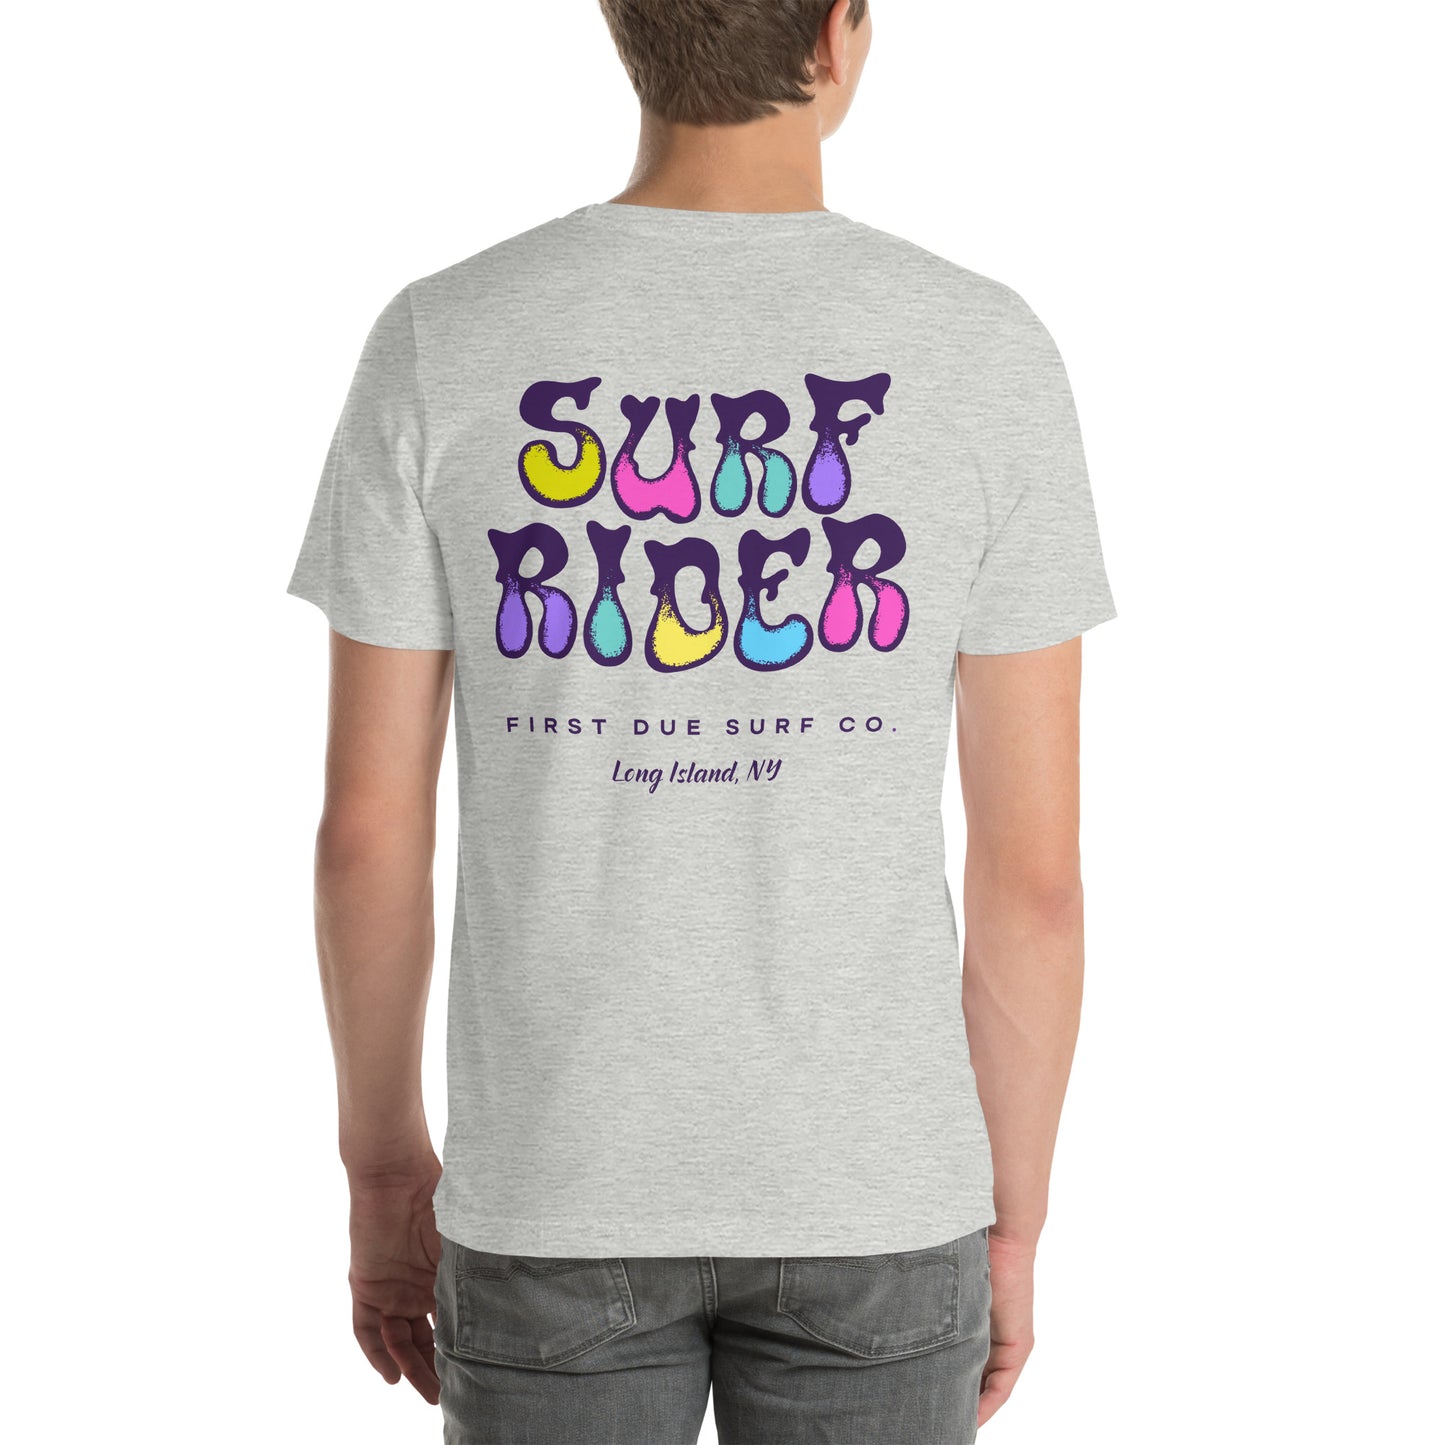 Surf Rider T-Shirt